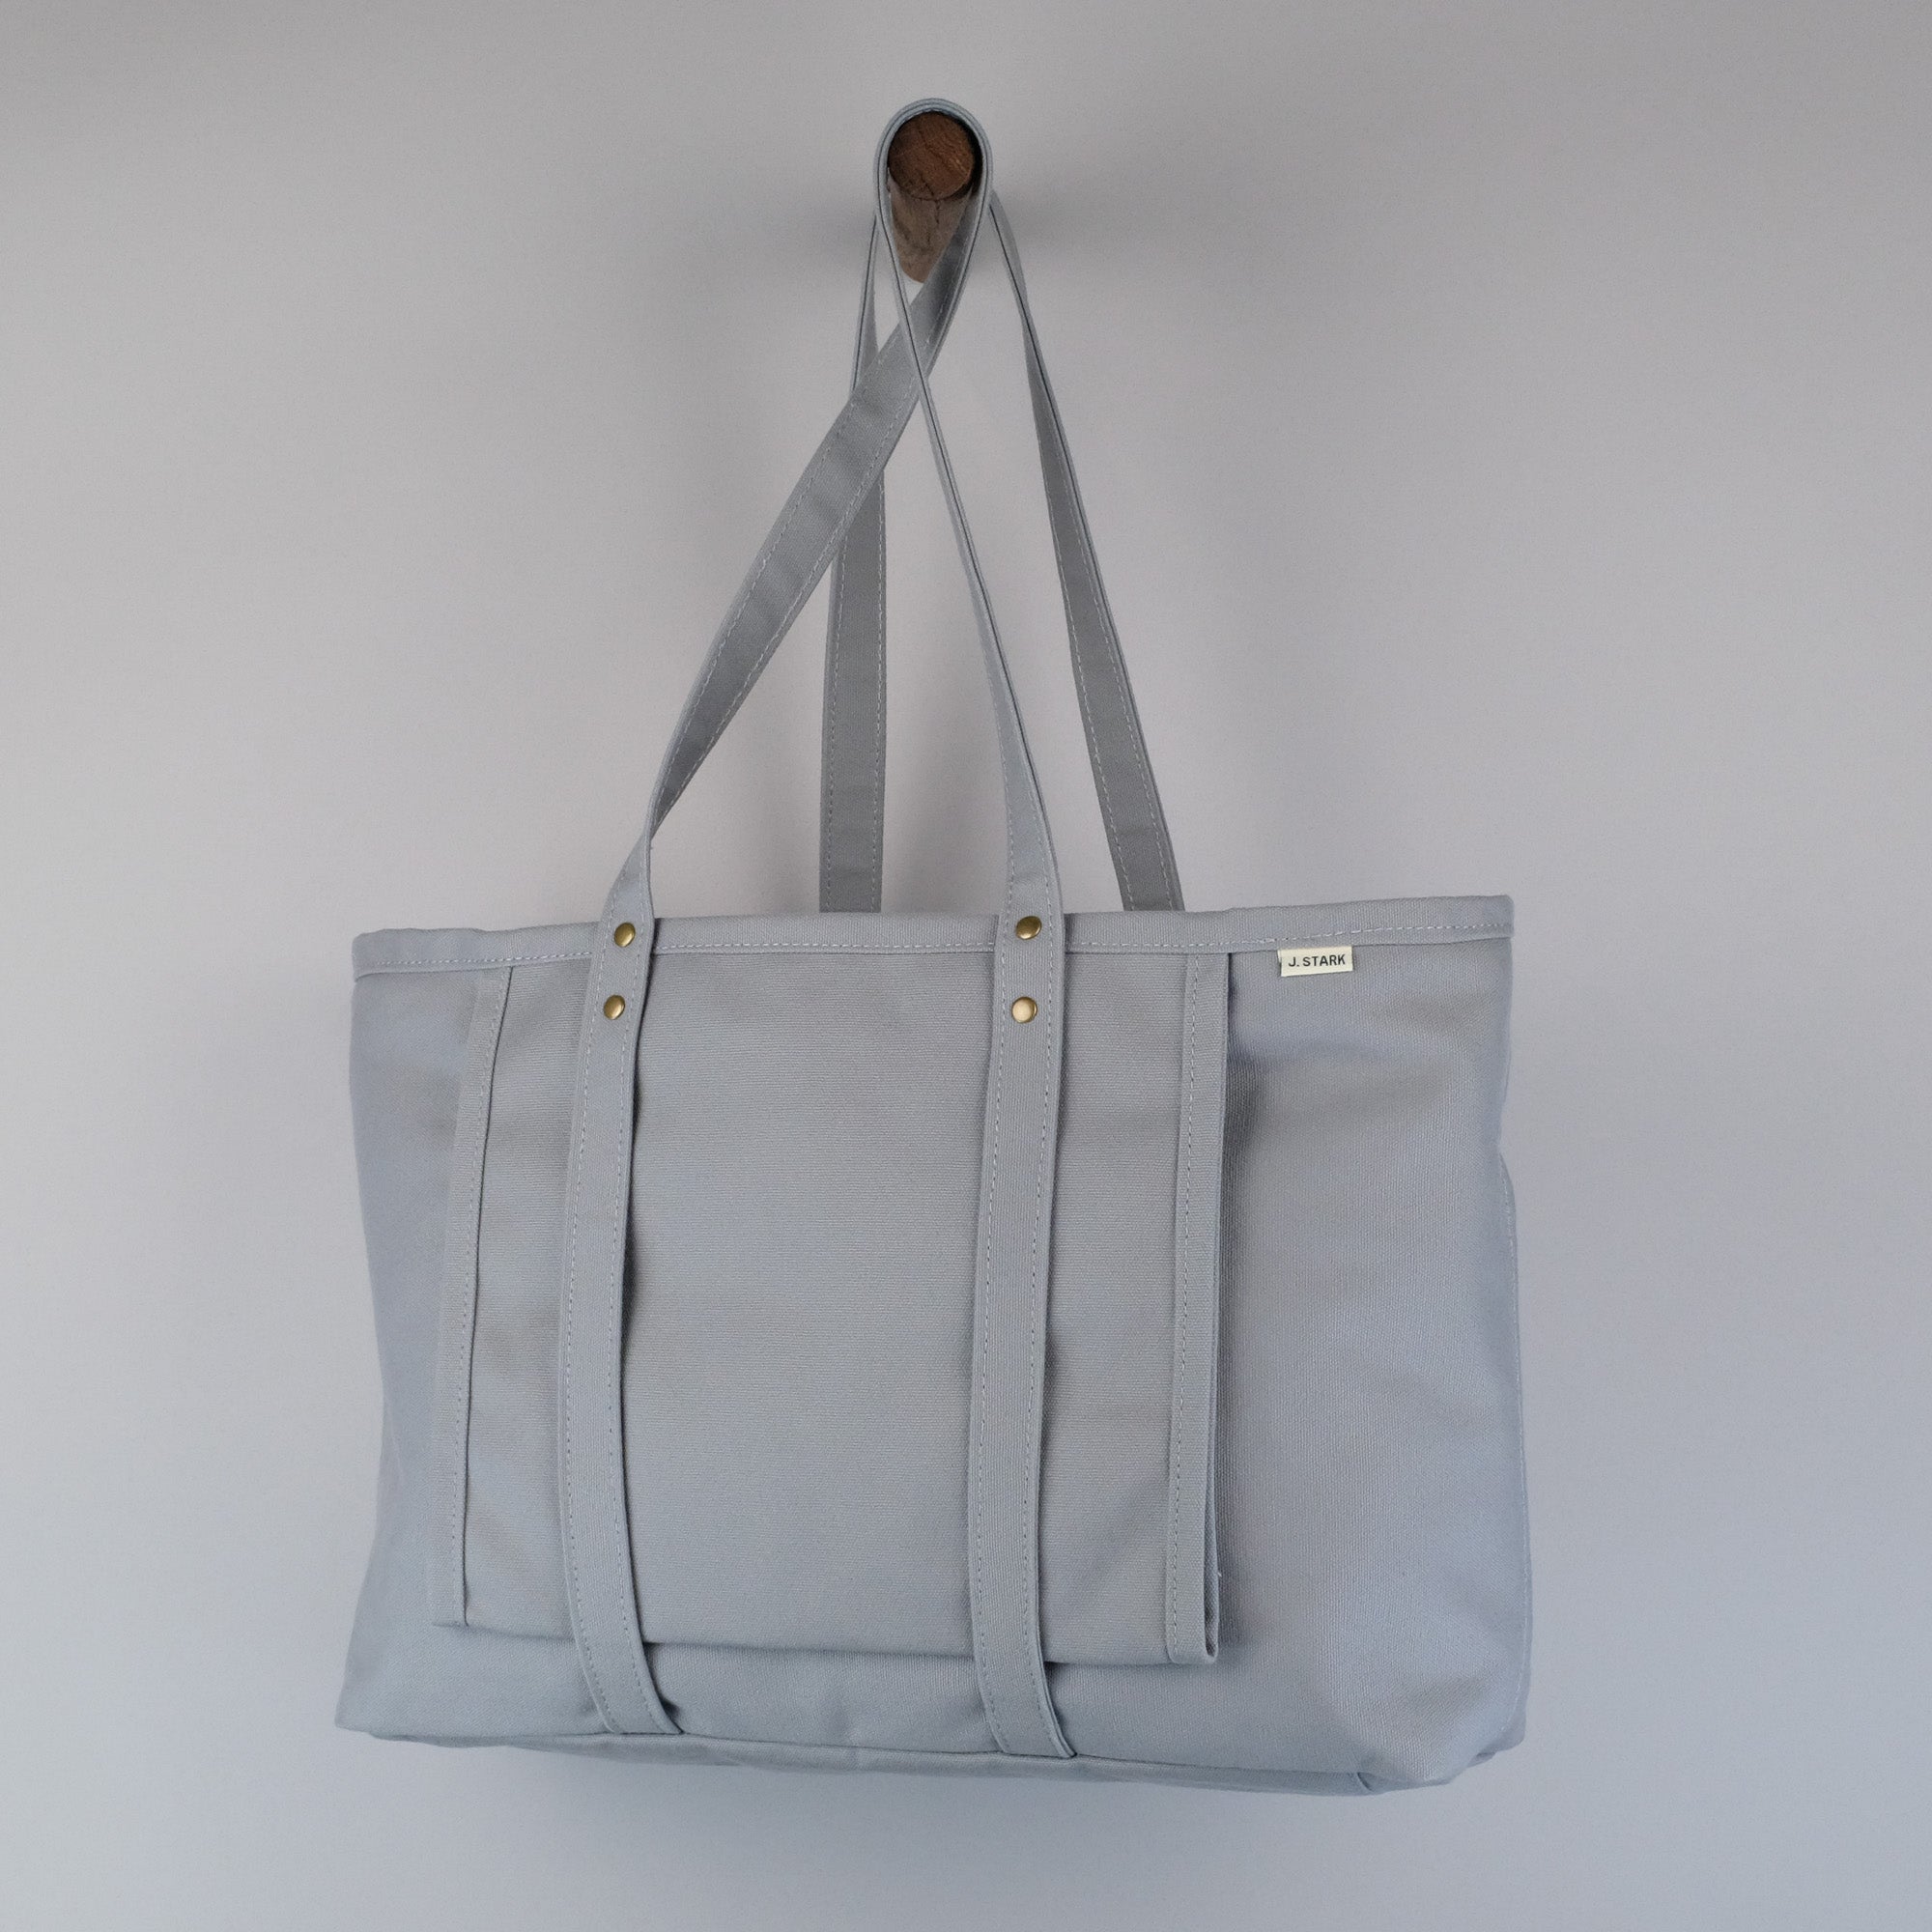 Vintage Tote Bag - lotsofyoga